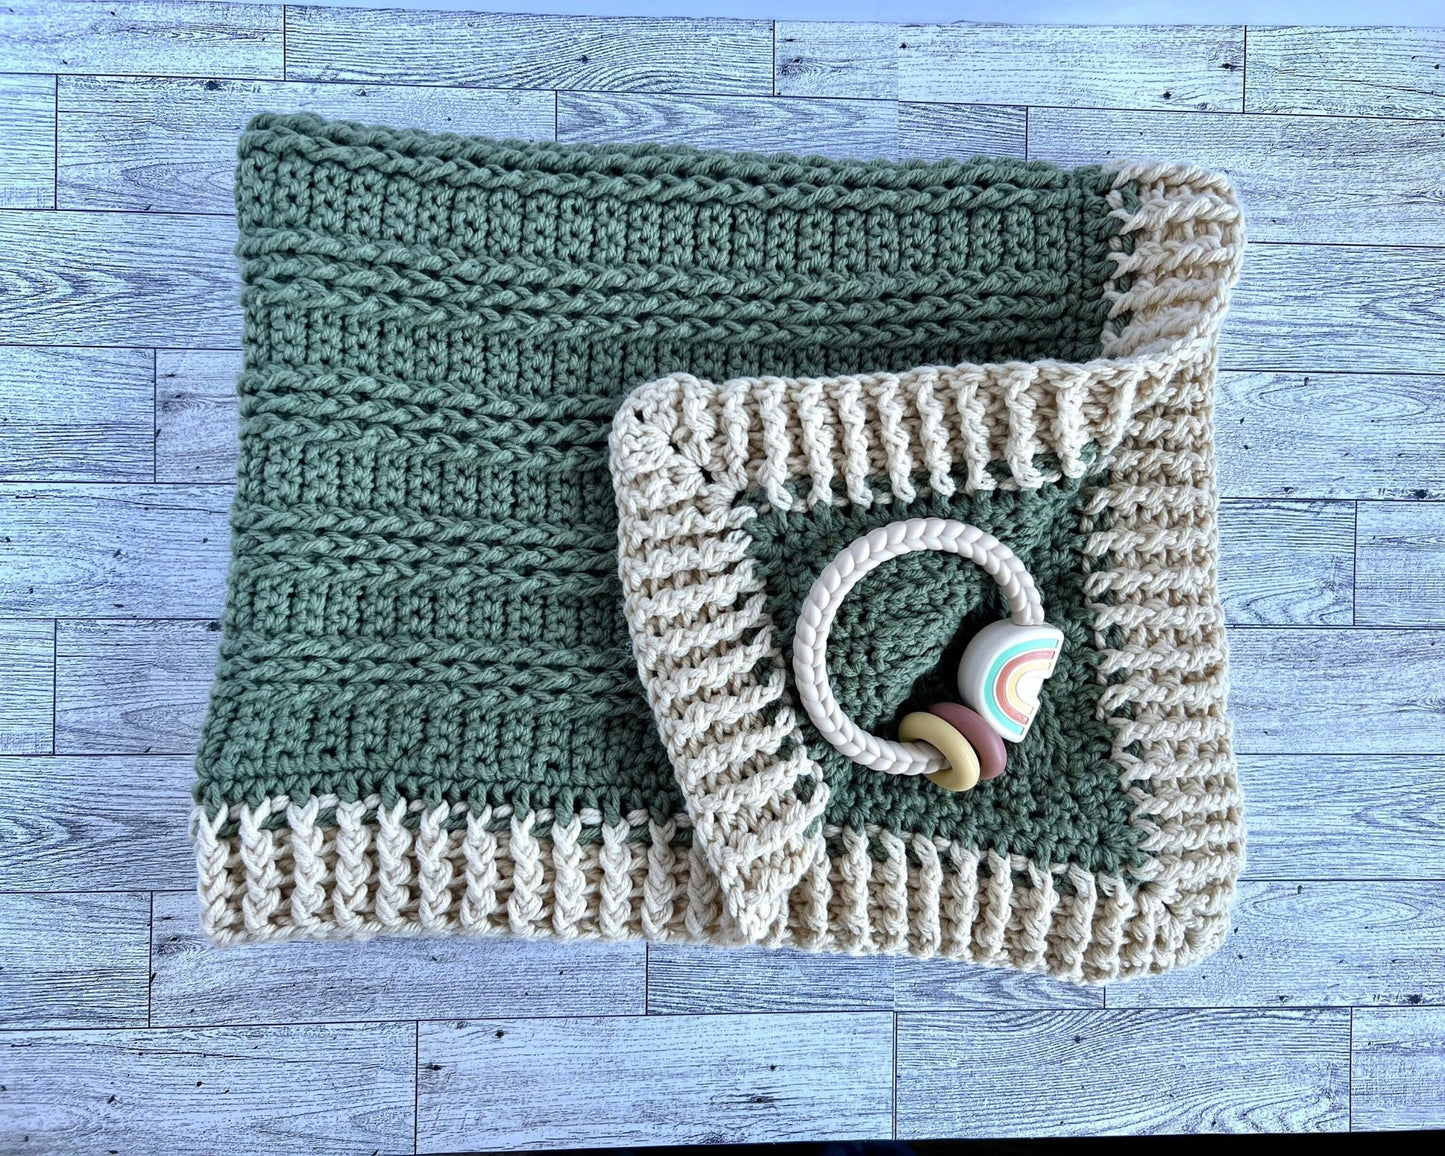 Green and beige baby blanket,modern heirloom blanket, blanket for baby boy- baby shower gift 31”x26”cradle blanket, boho room decor - Lilly Grace Sparkle Boutique